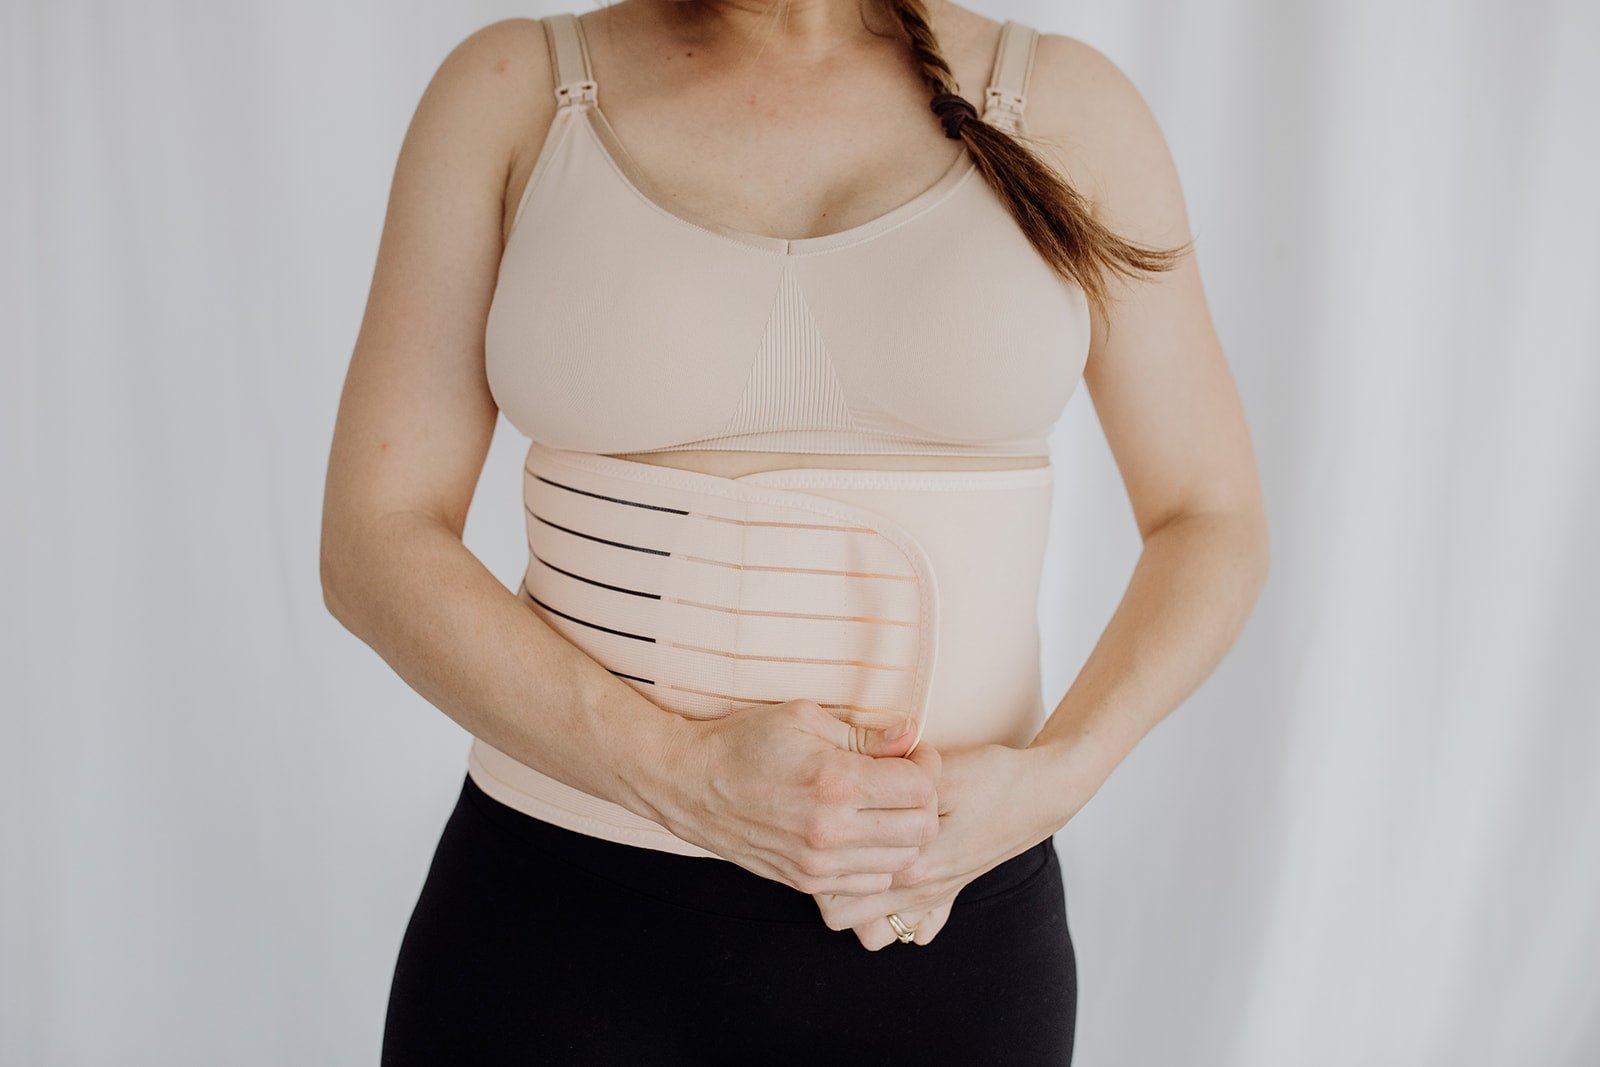 3-in-1 Postpartum Support Belt - Belly Band